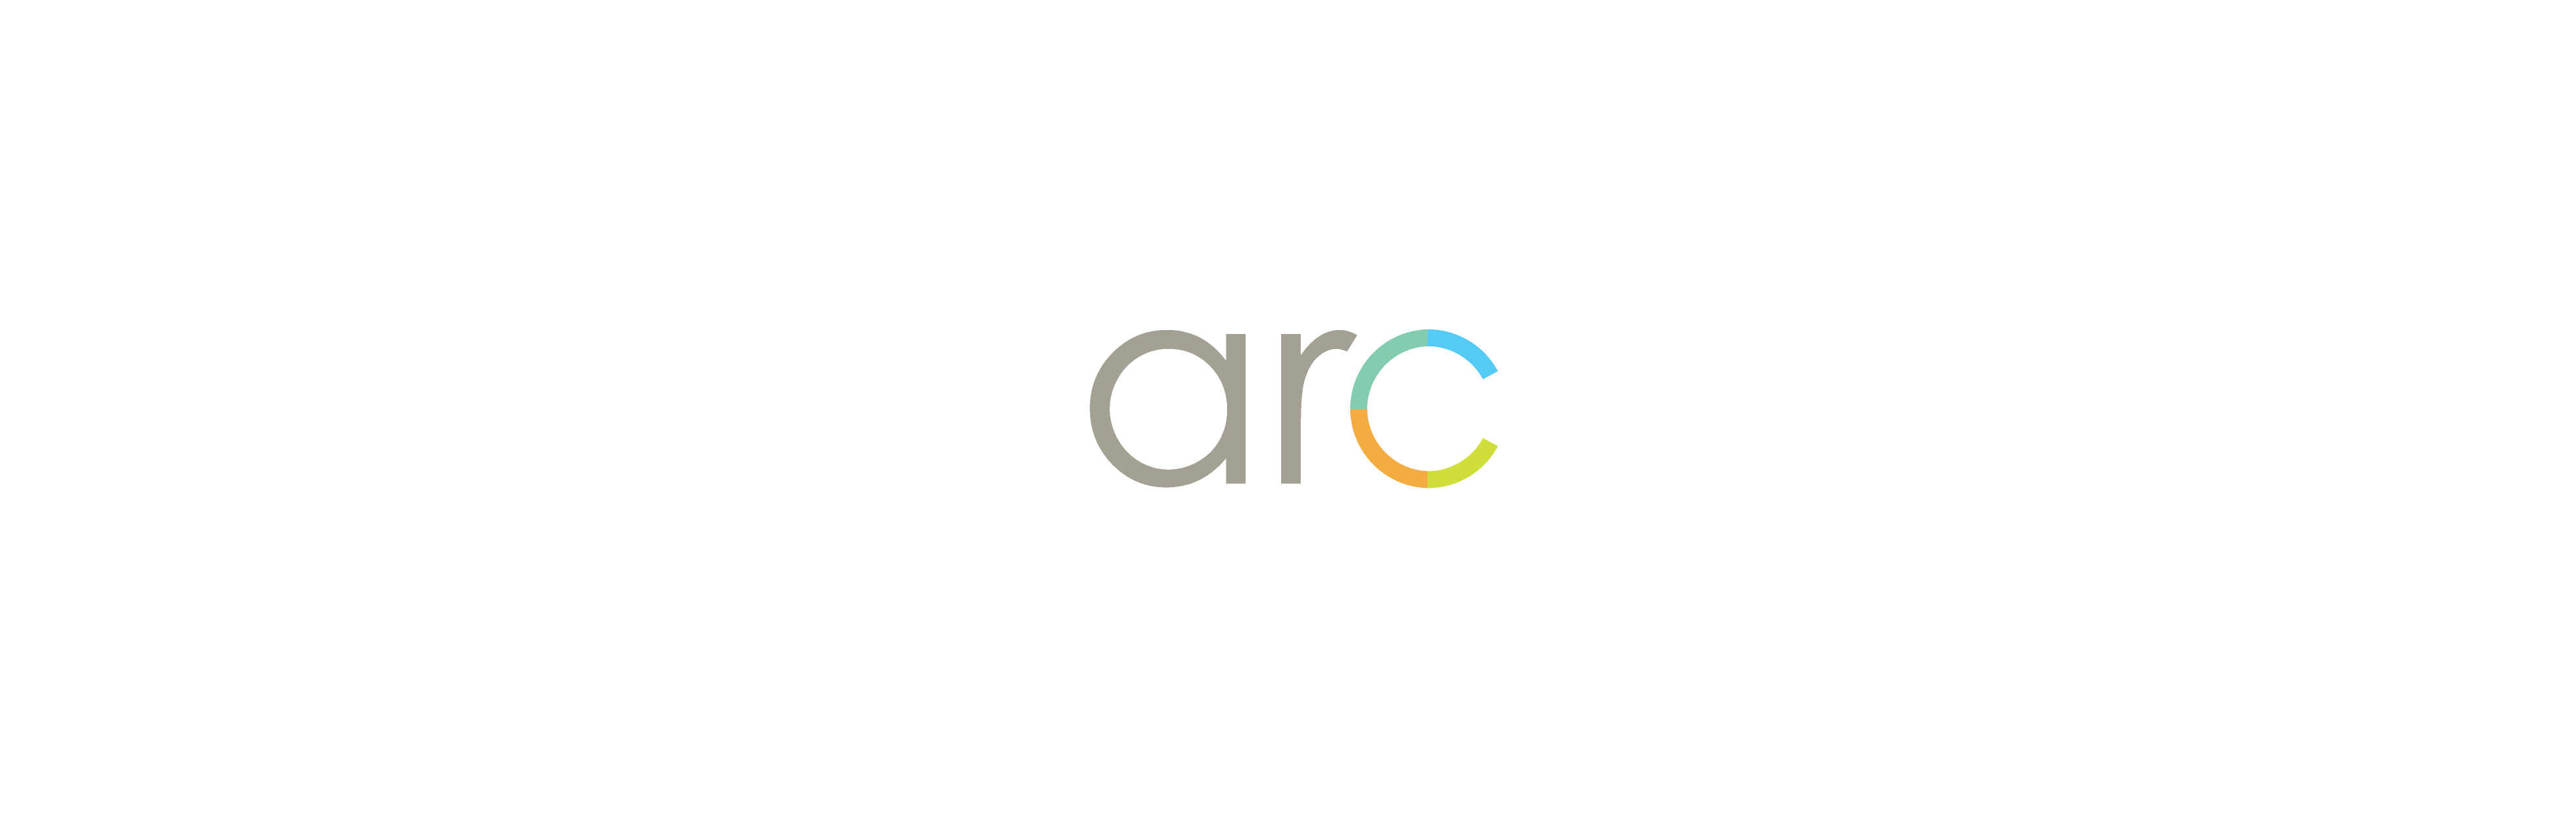 Becoming Logo - Evolution of the Arc logo: Designing for a new brand | USGBC Studio